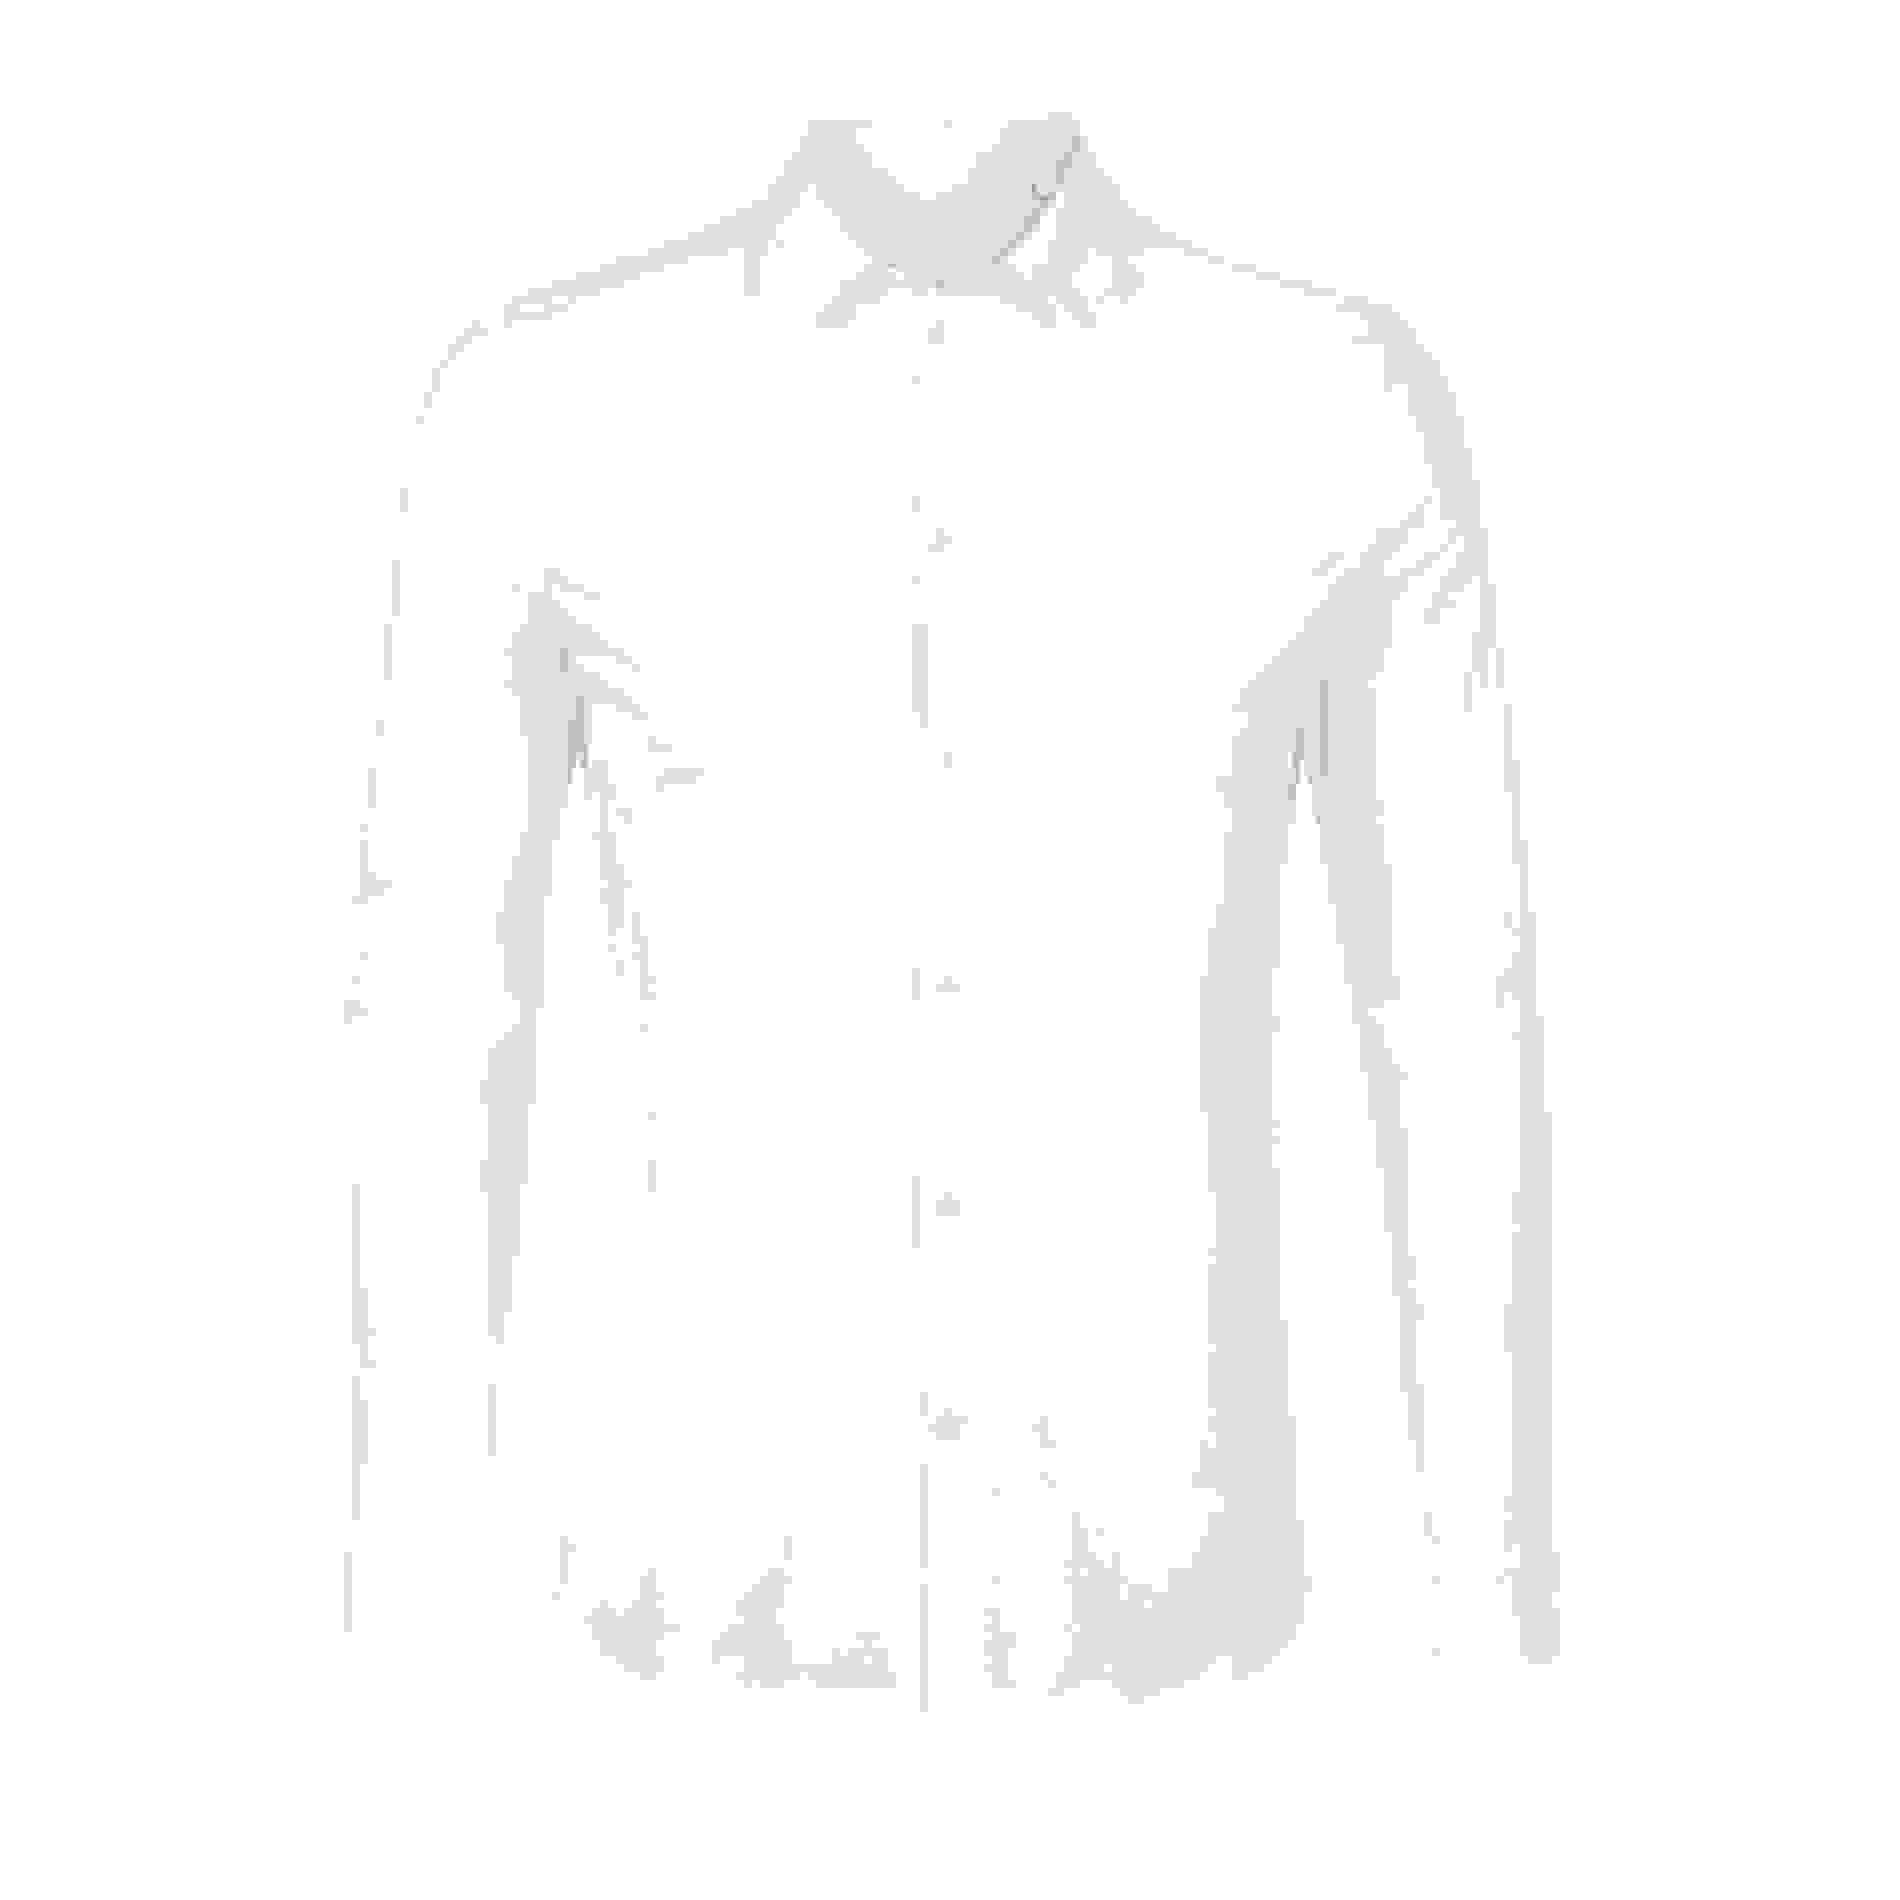 Koszula firmowa Neoblu Jersey Balthazar - Optic White